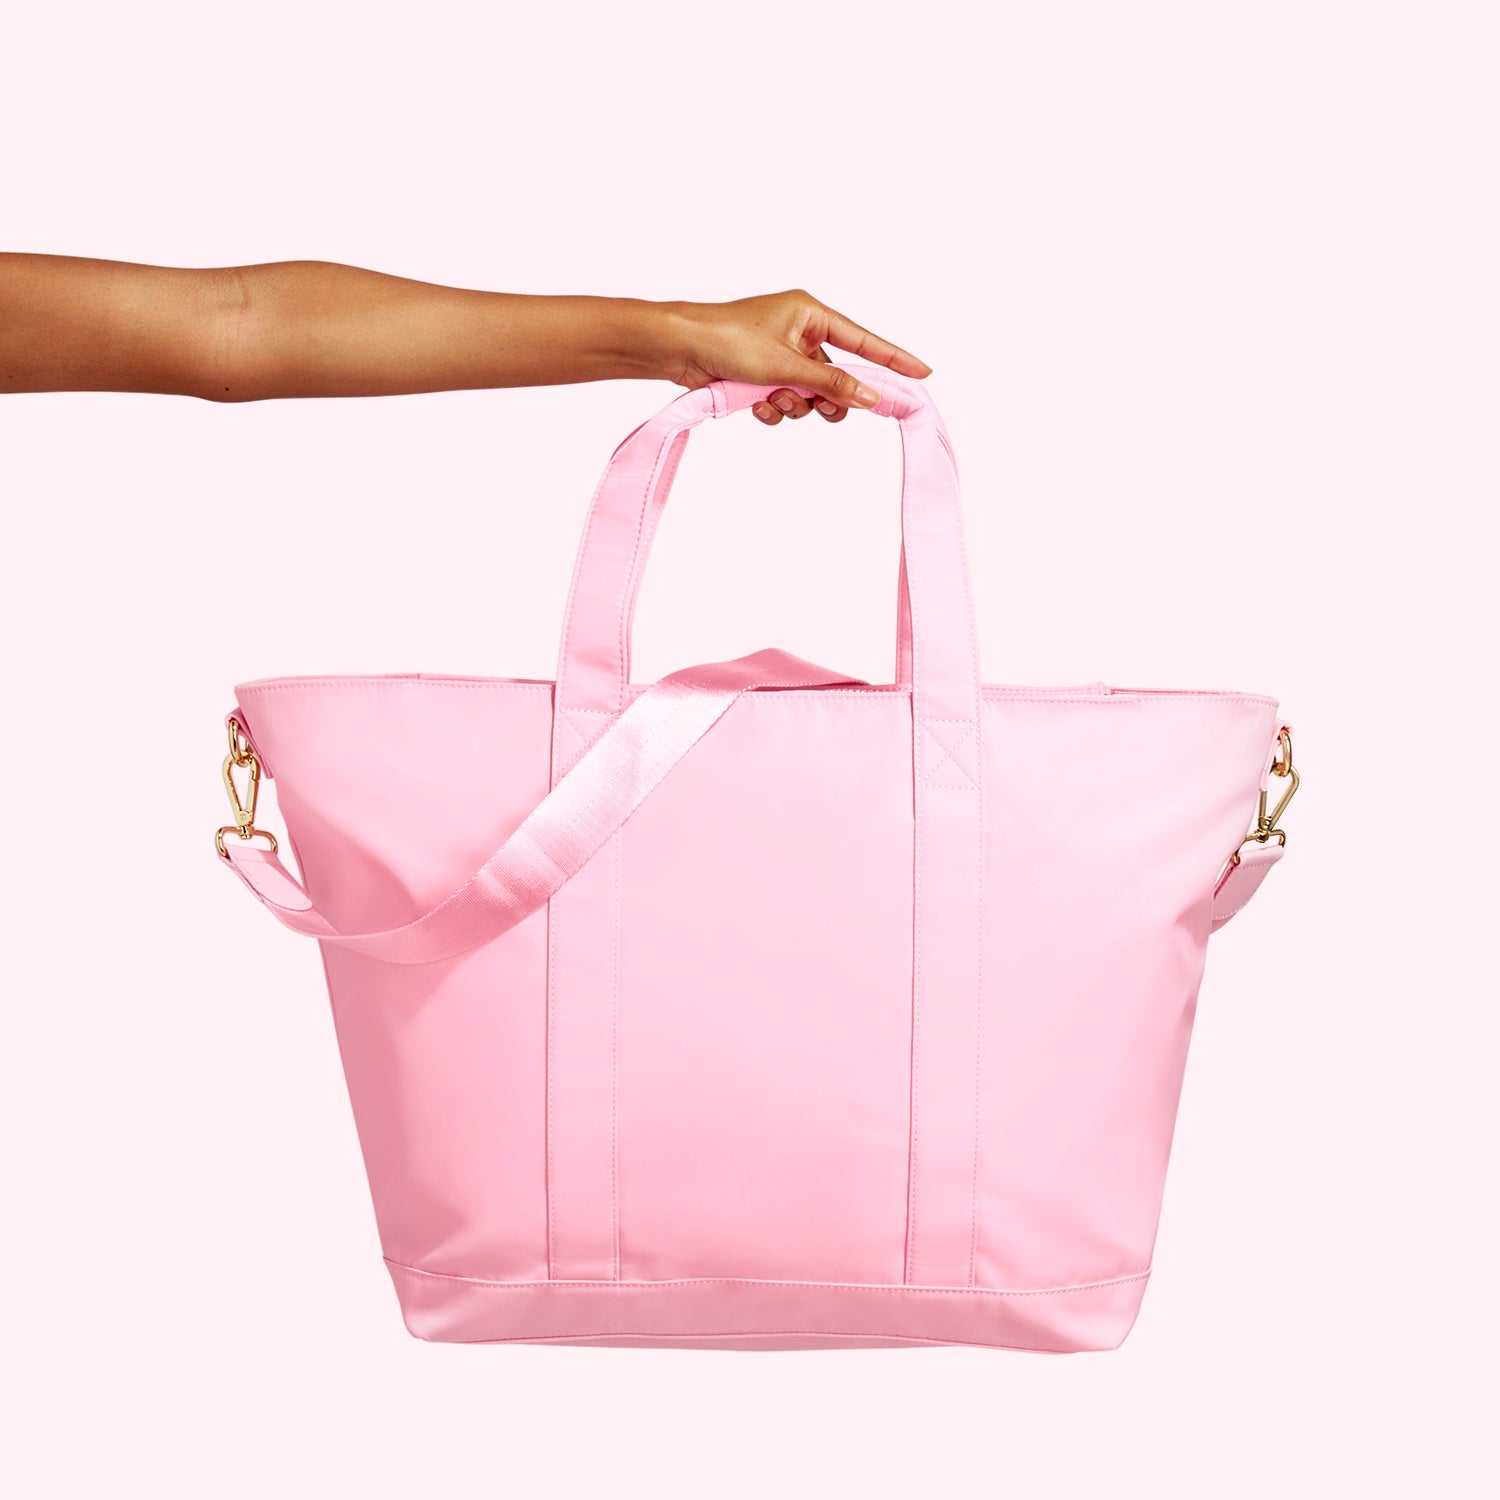 Lacoste Bag Women - Shop on Pinterest